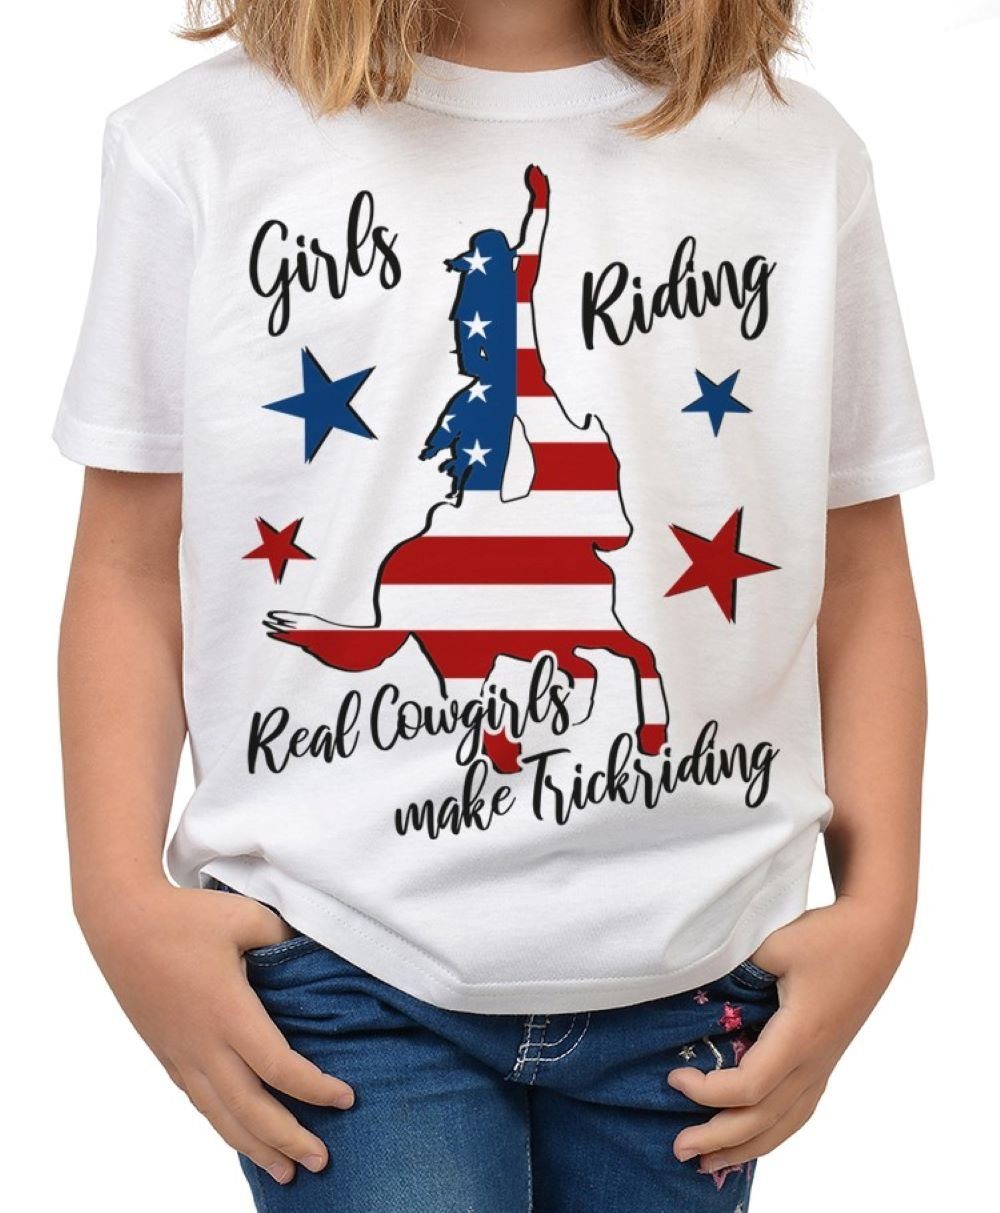 Tini - Shirts T-Shirt Trickriding Trickreiter Kinder Shirt Cowgirl Trickreiter Motiv T-Shirt Kindershirt : Girls Riding Real Cowgirls make Trickriding